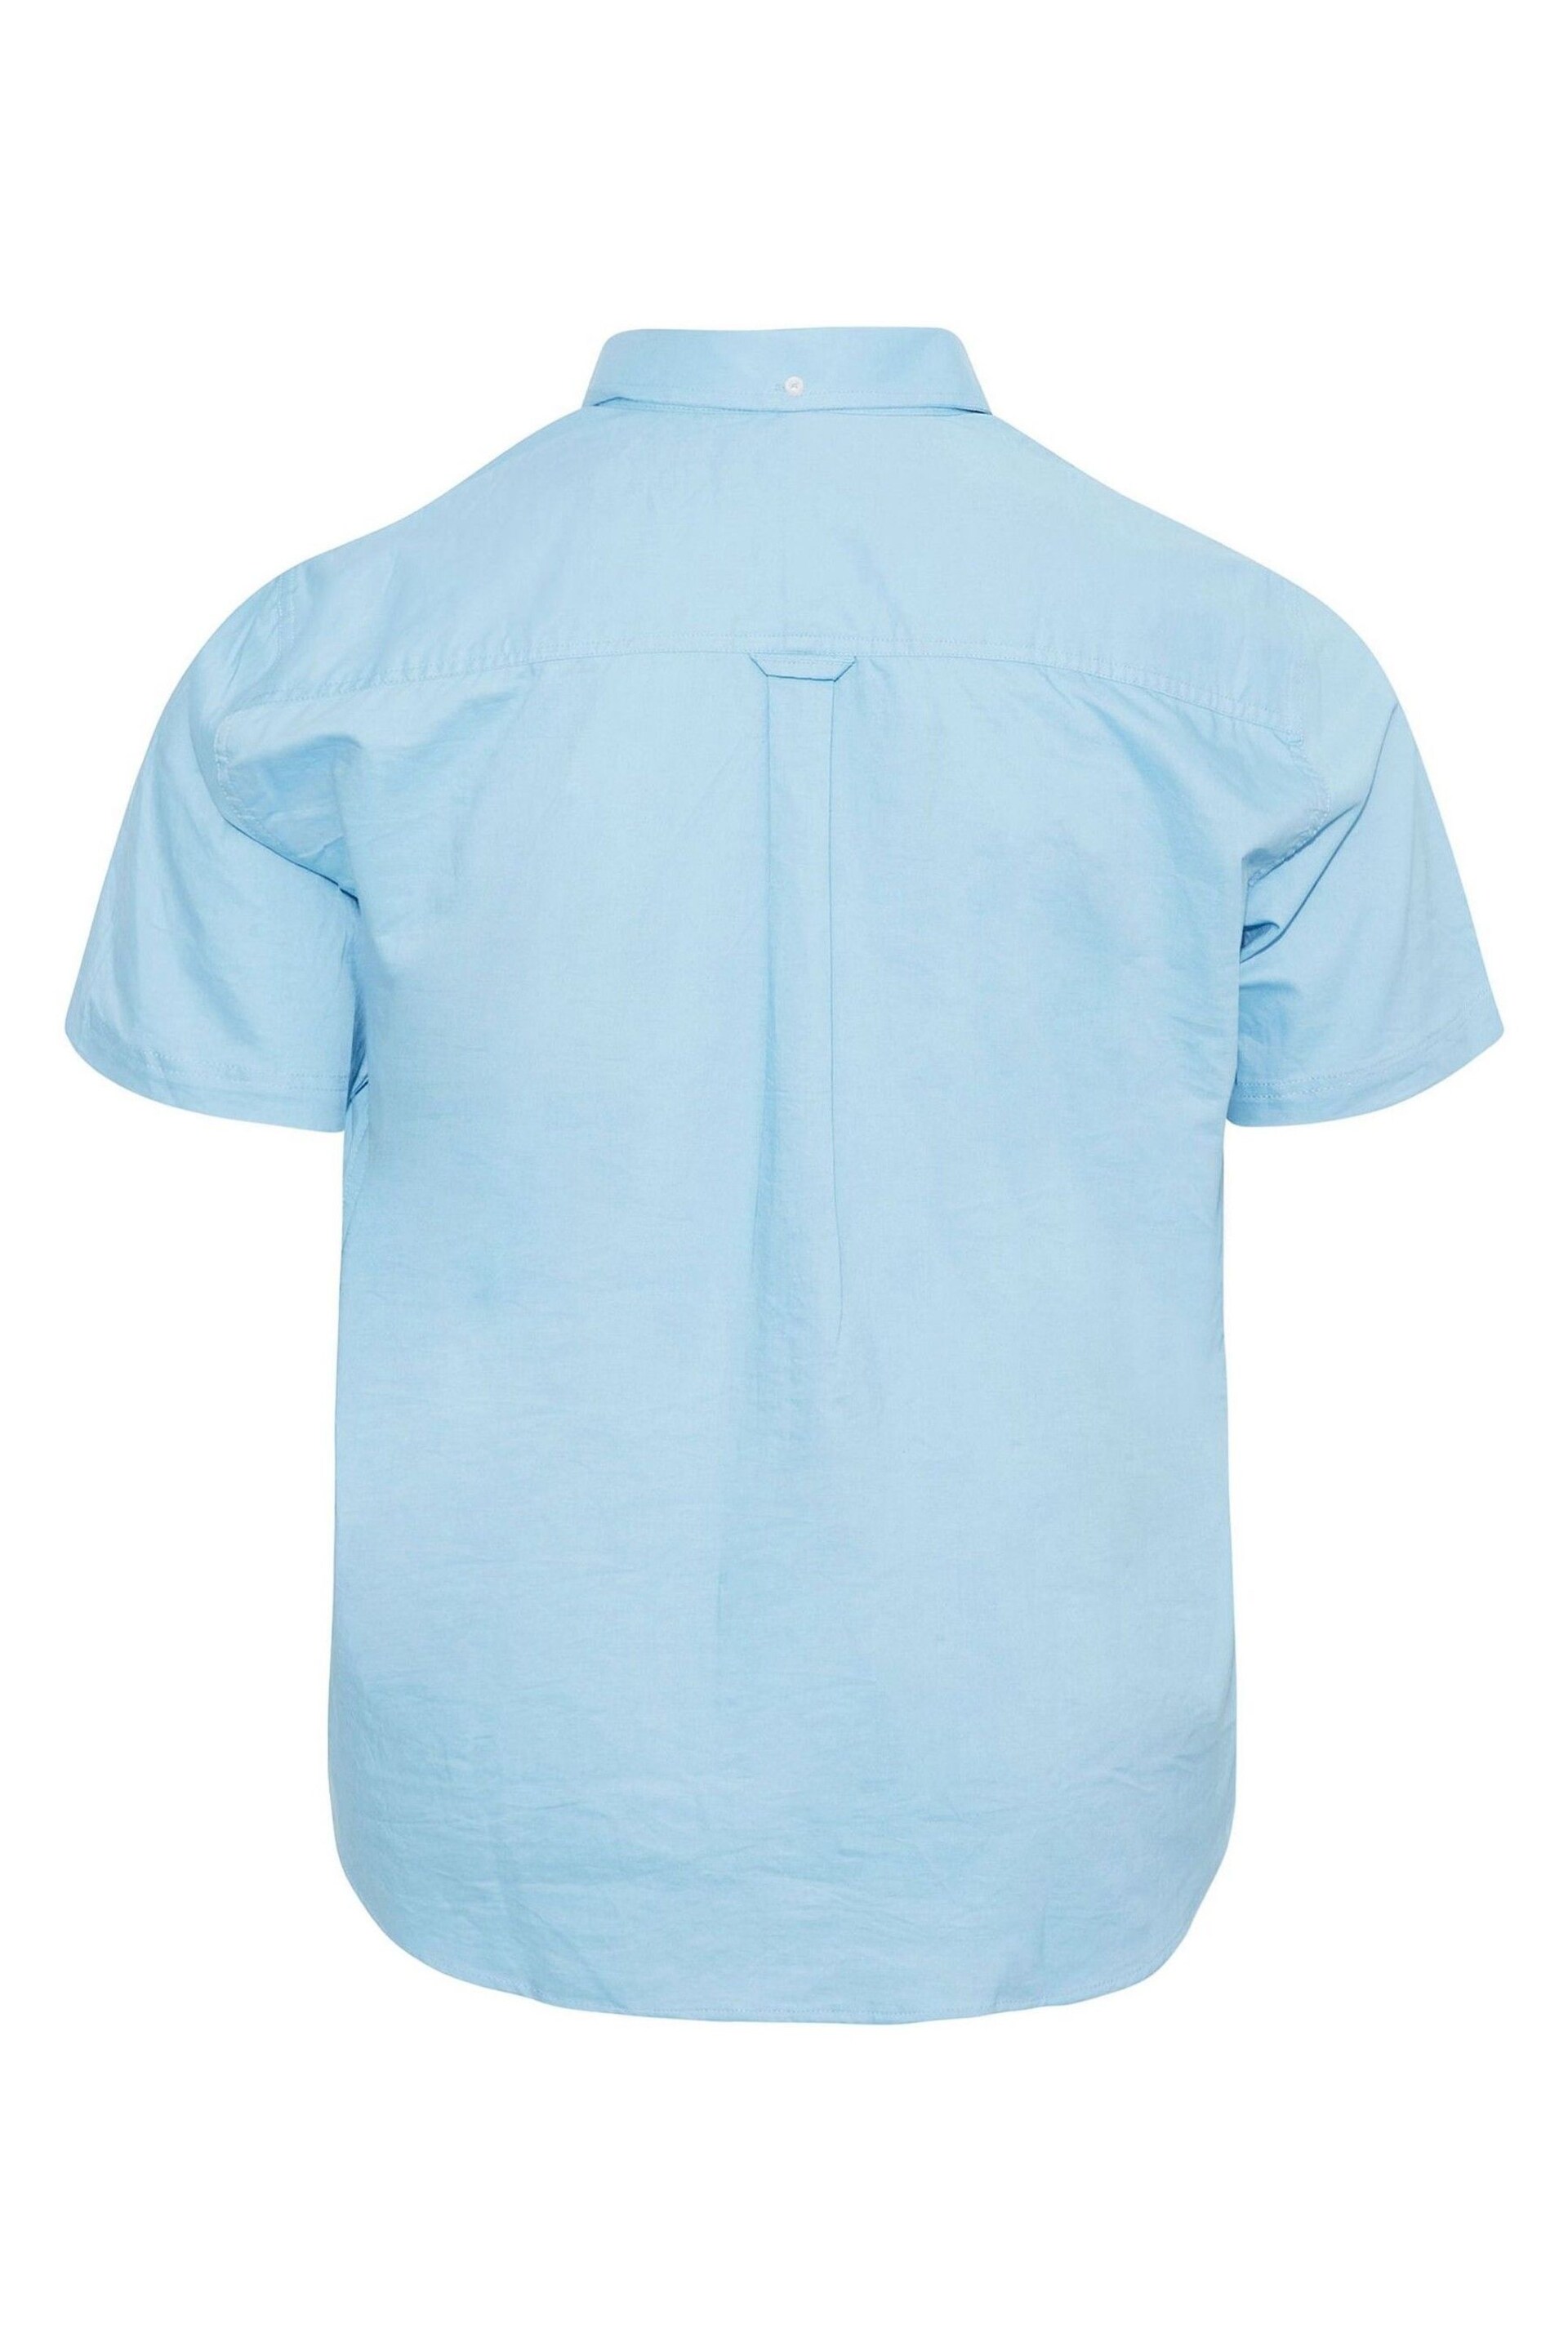 BadRhino Big & Tall Light Blue Short Sleeve Oxford Shirt - Image 3 of 3